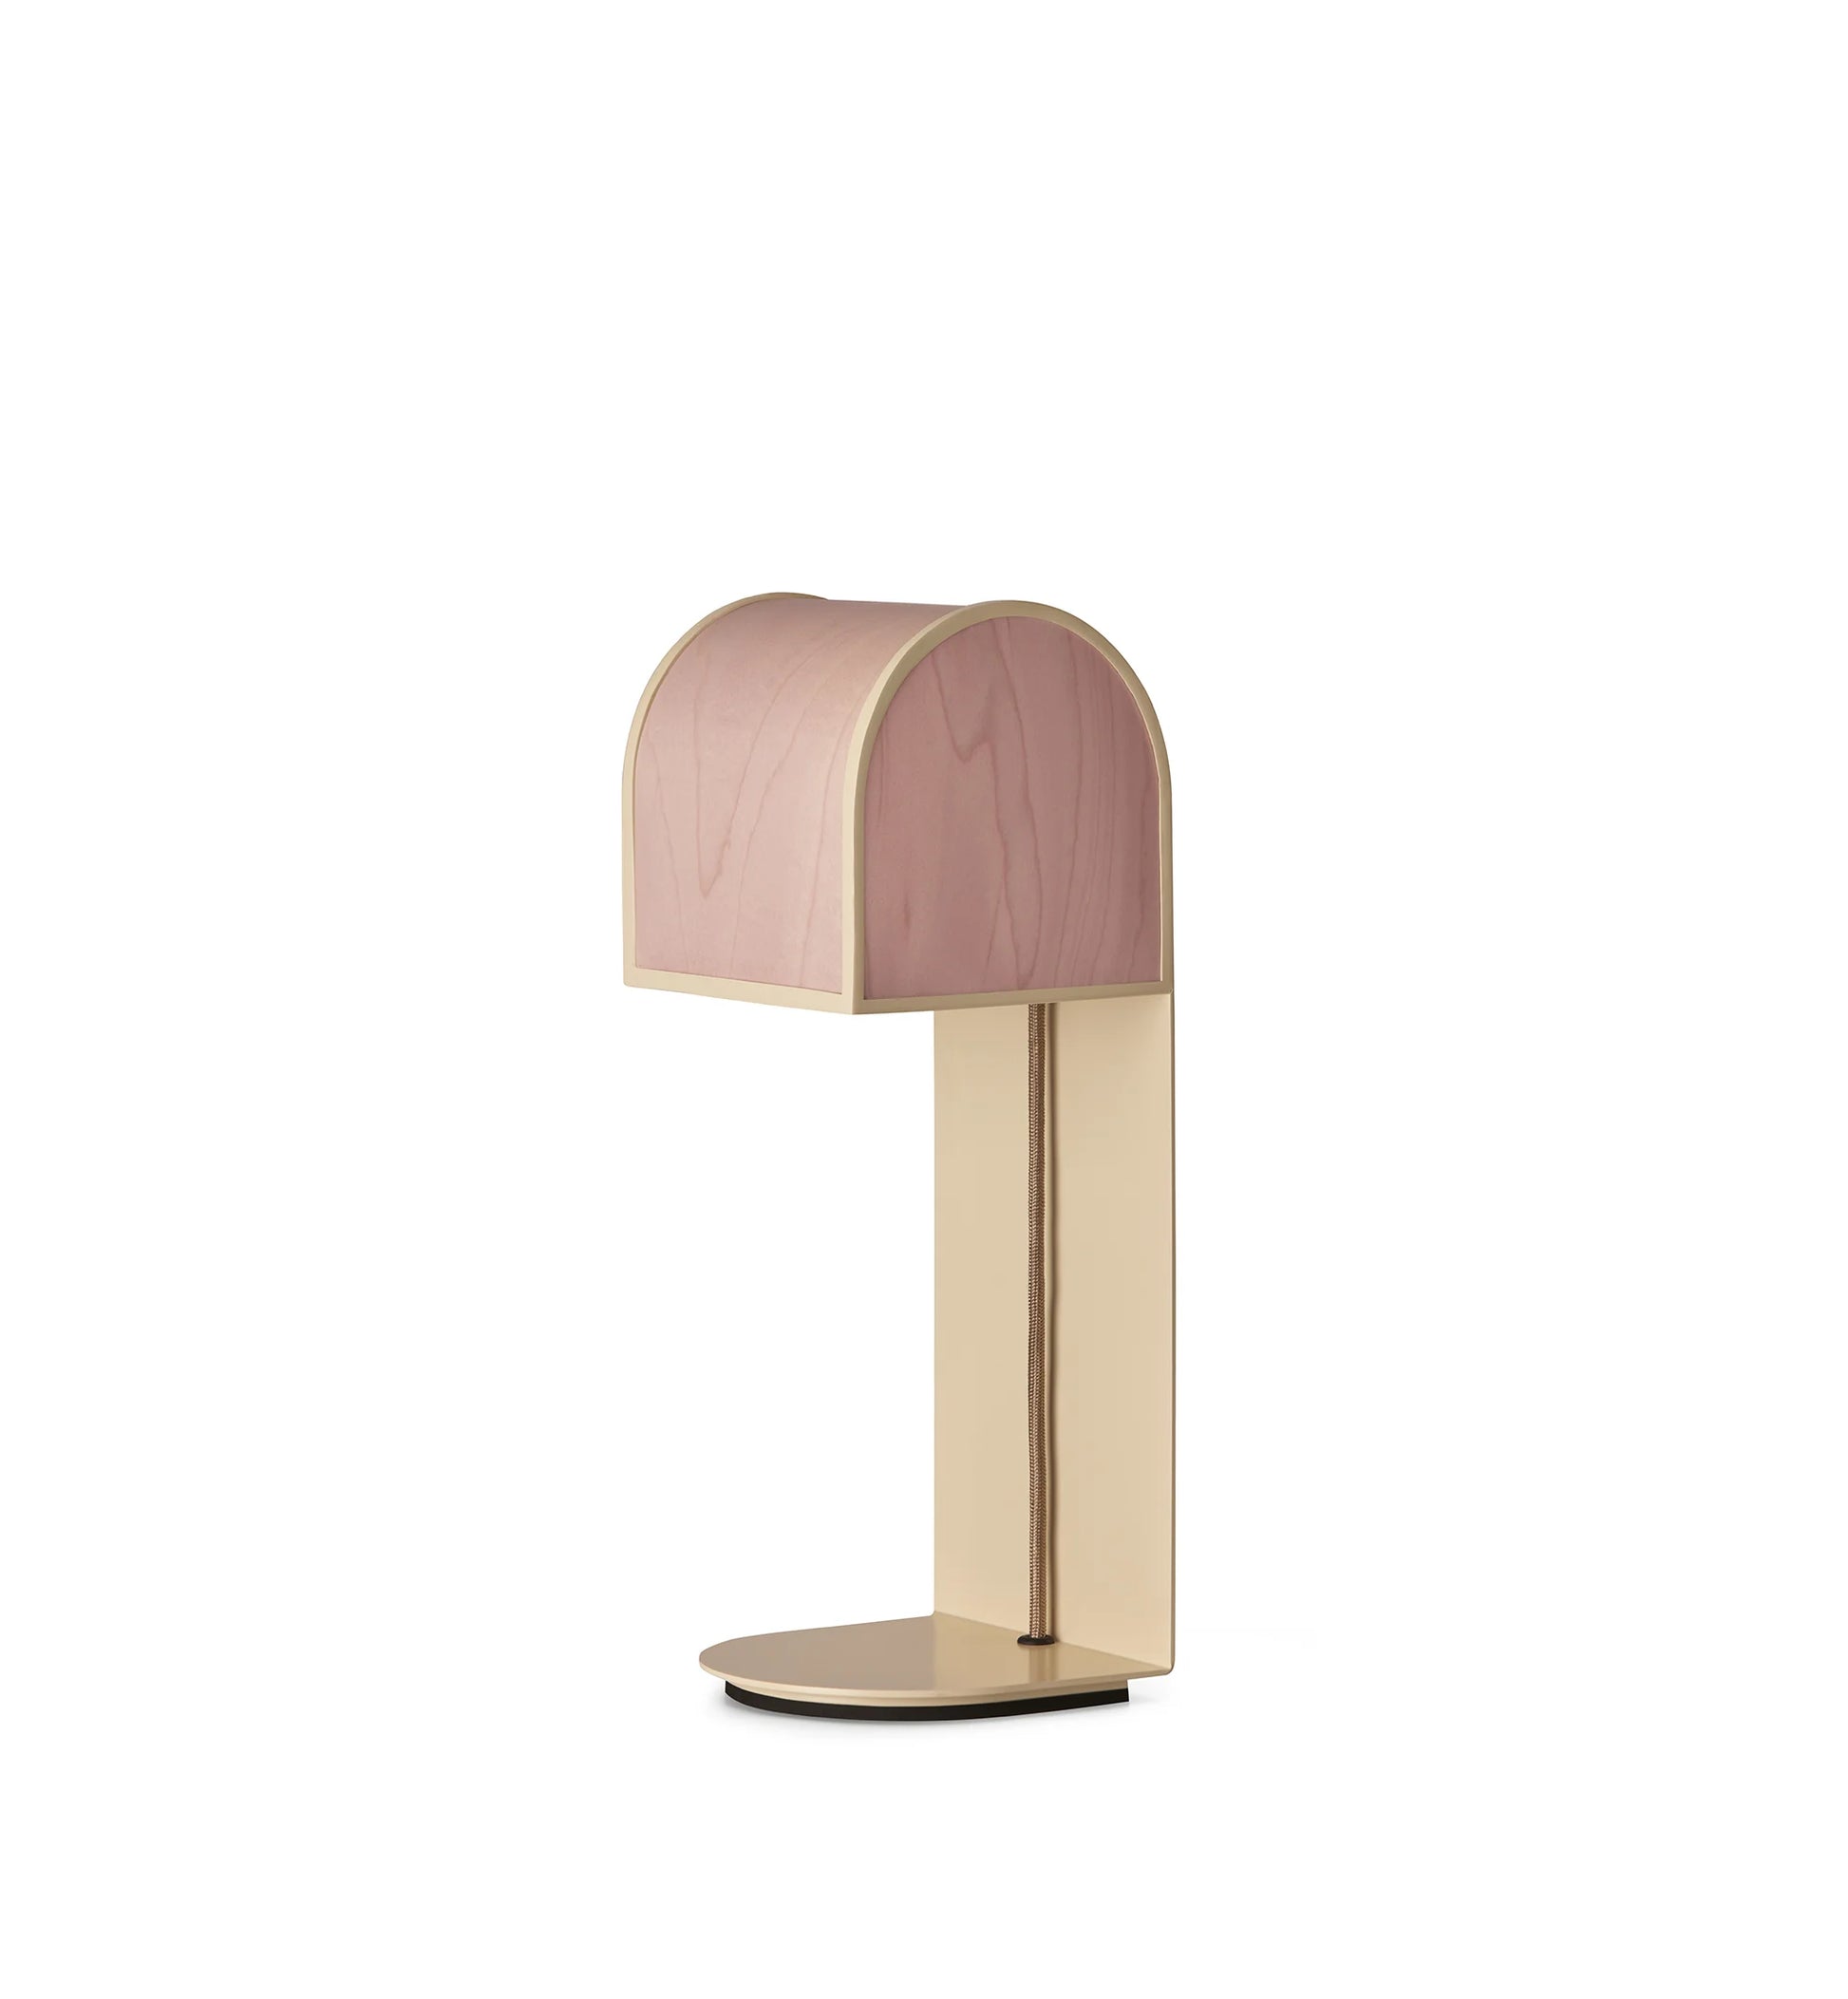 Pink Wood Veneer Table lamp. Boho Chic Table lamp, Bohemian chic table lamp. table lamp design. small table lamp